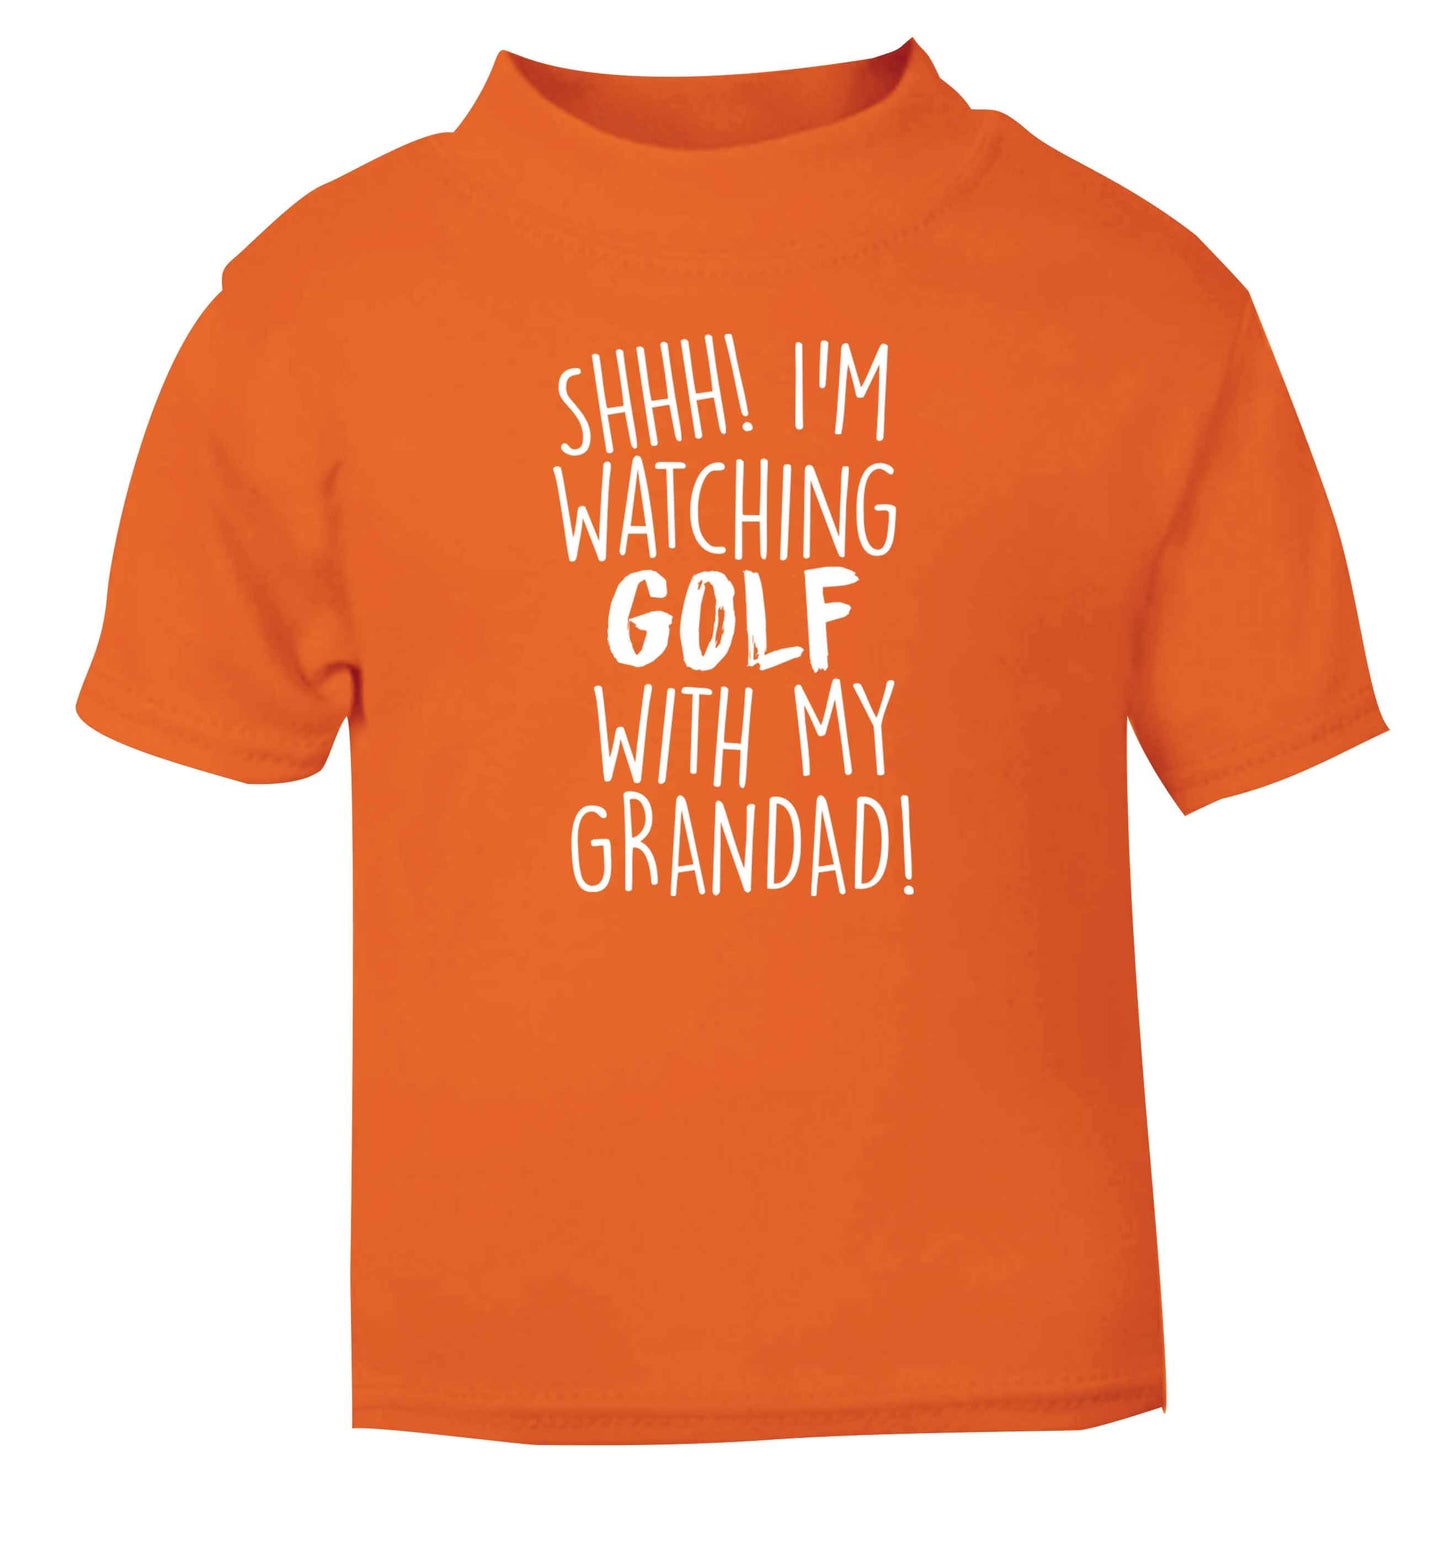 Shh I'm watching golf with my grandad orange Baby Toddler Tshirt 2 Years